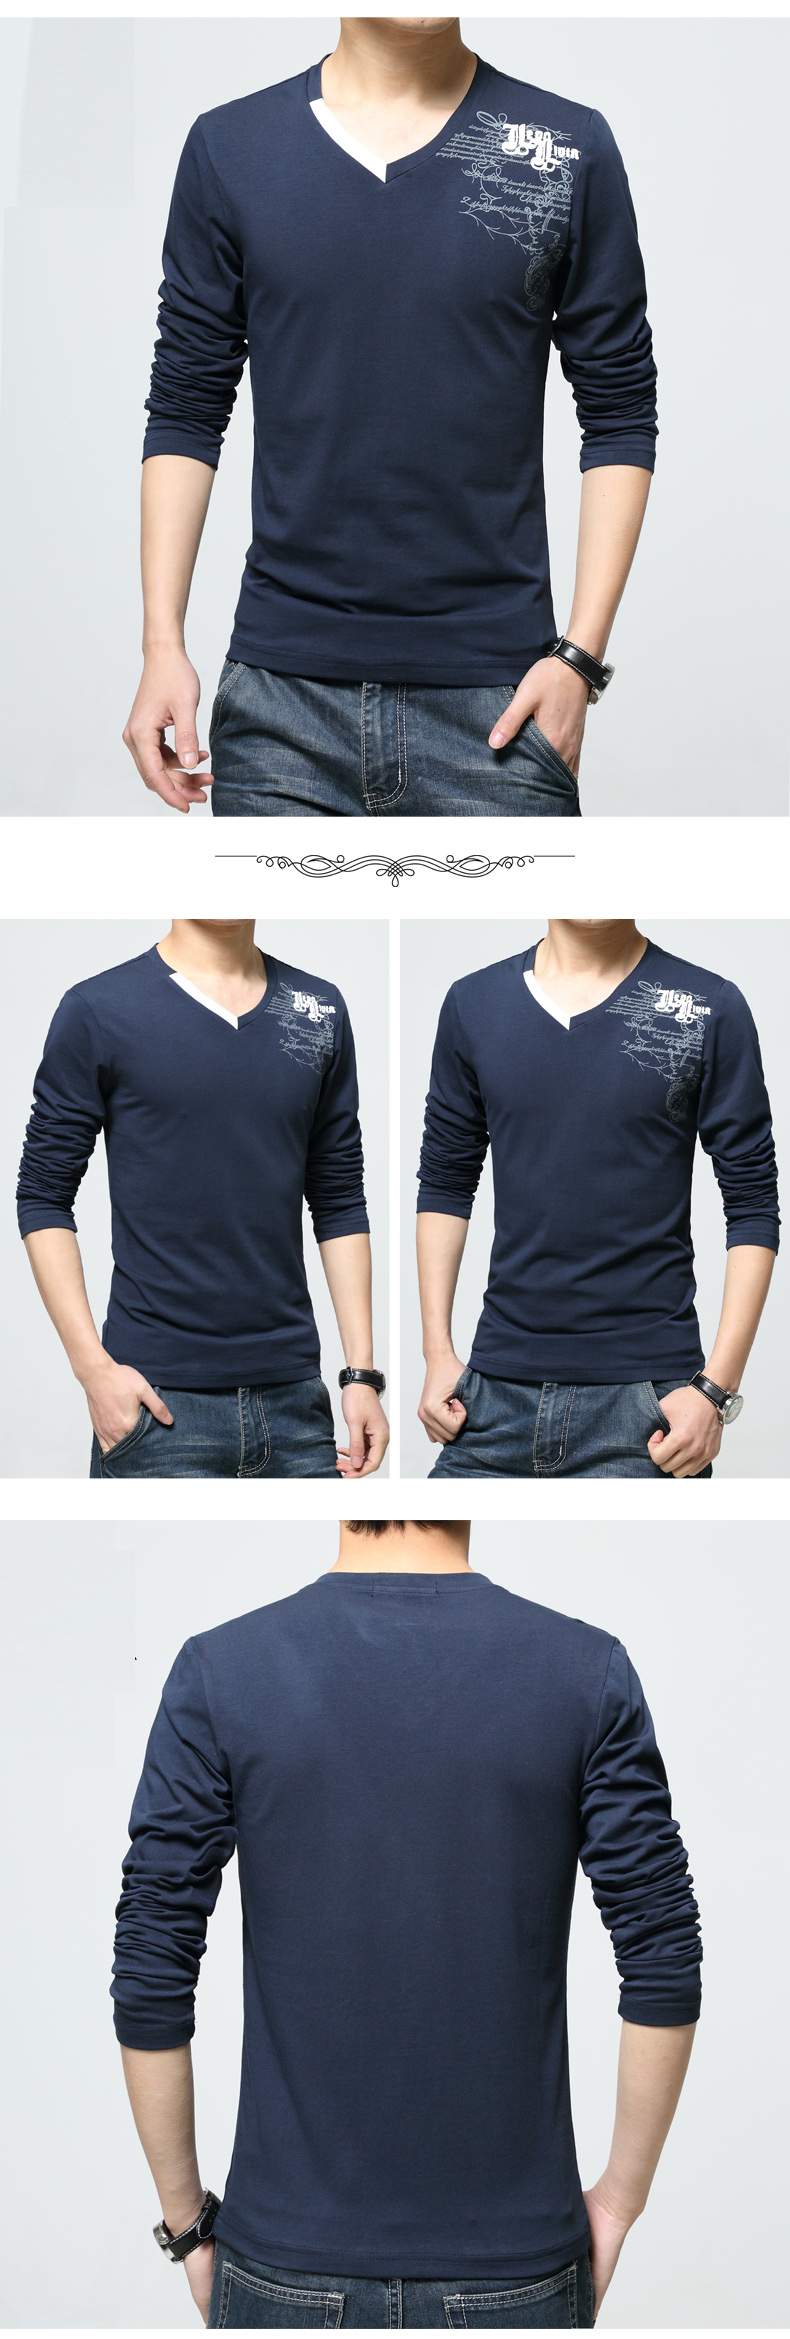 LEFTGU-t-shirt-New-2017-Fashion-Style-Plus-Size-Long-sleeved-V-Neck-Men39s-T-shirt-men-Asian-size-Te-32710990372